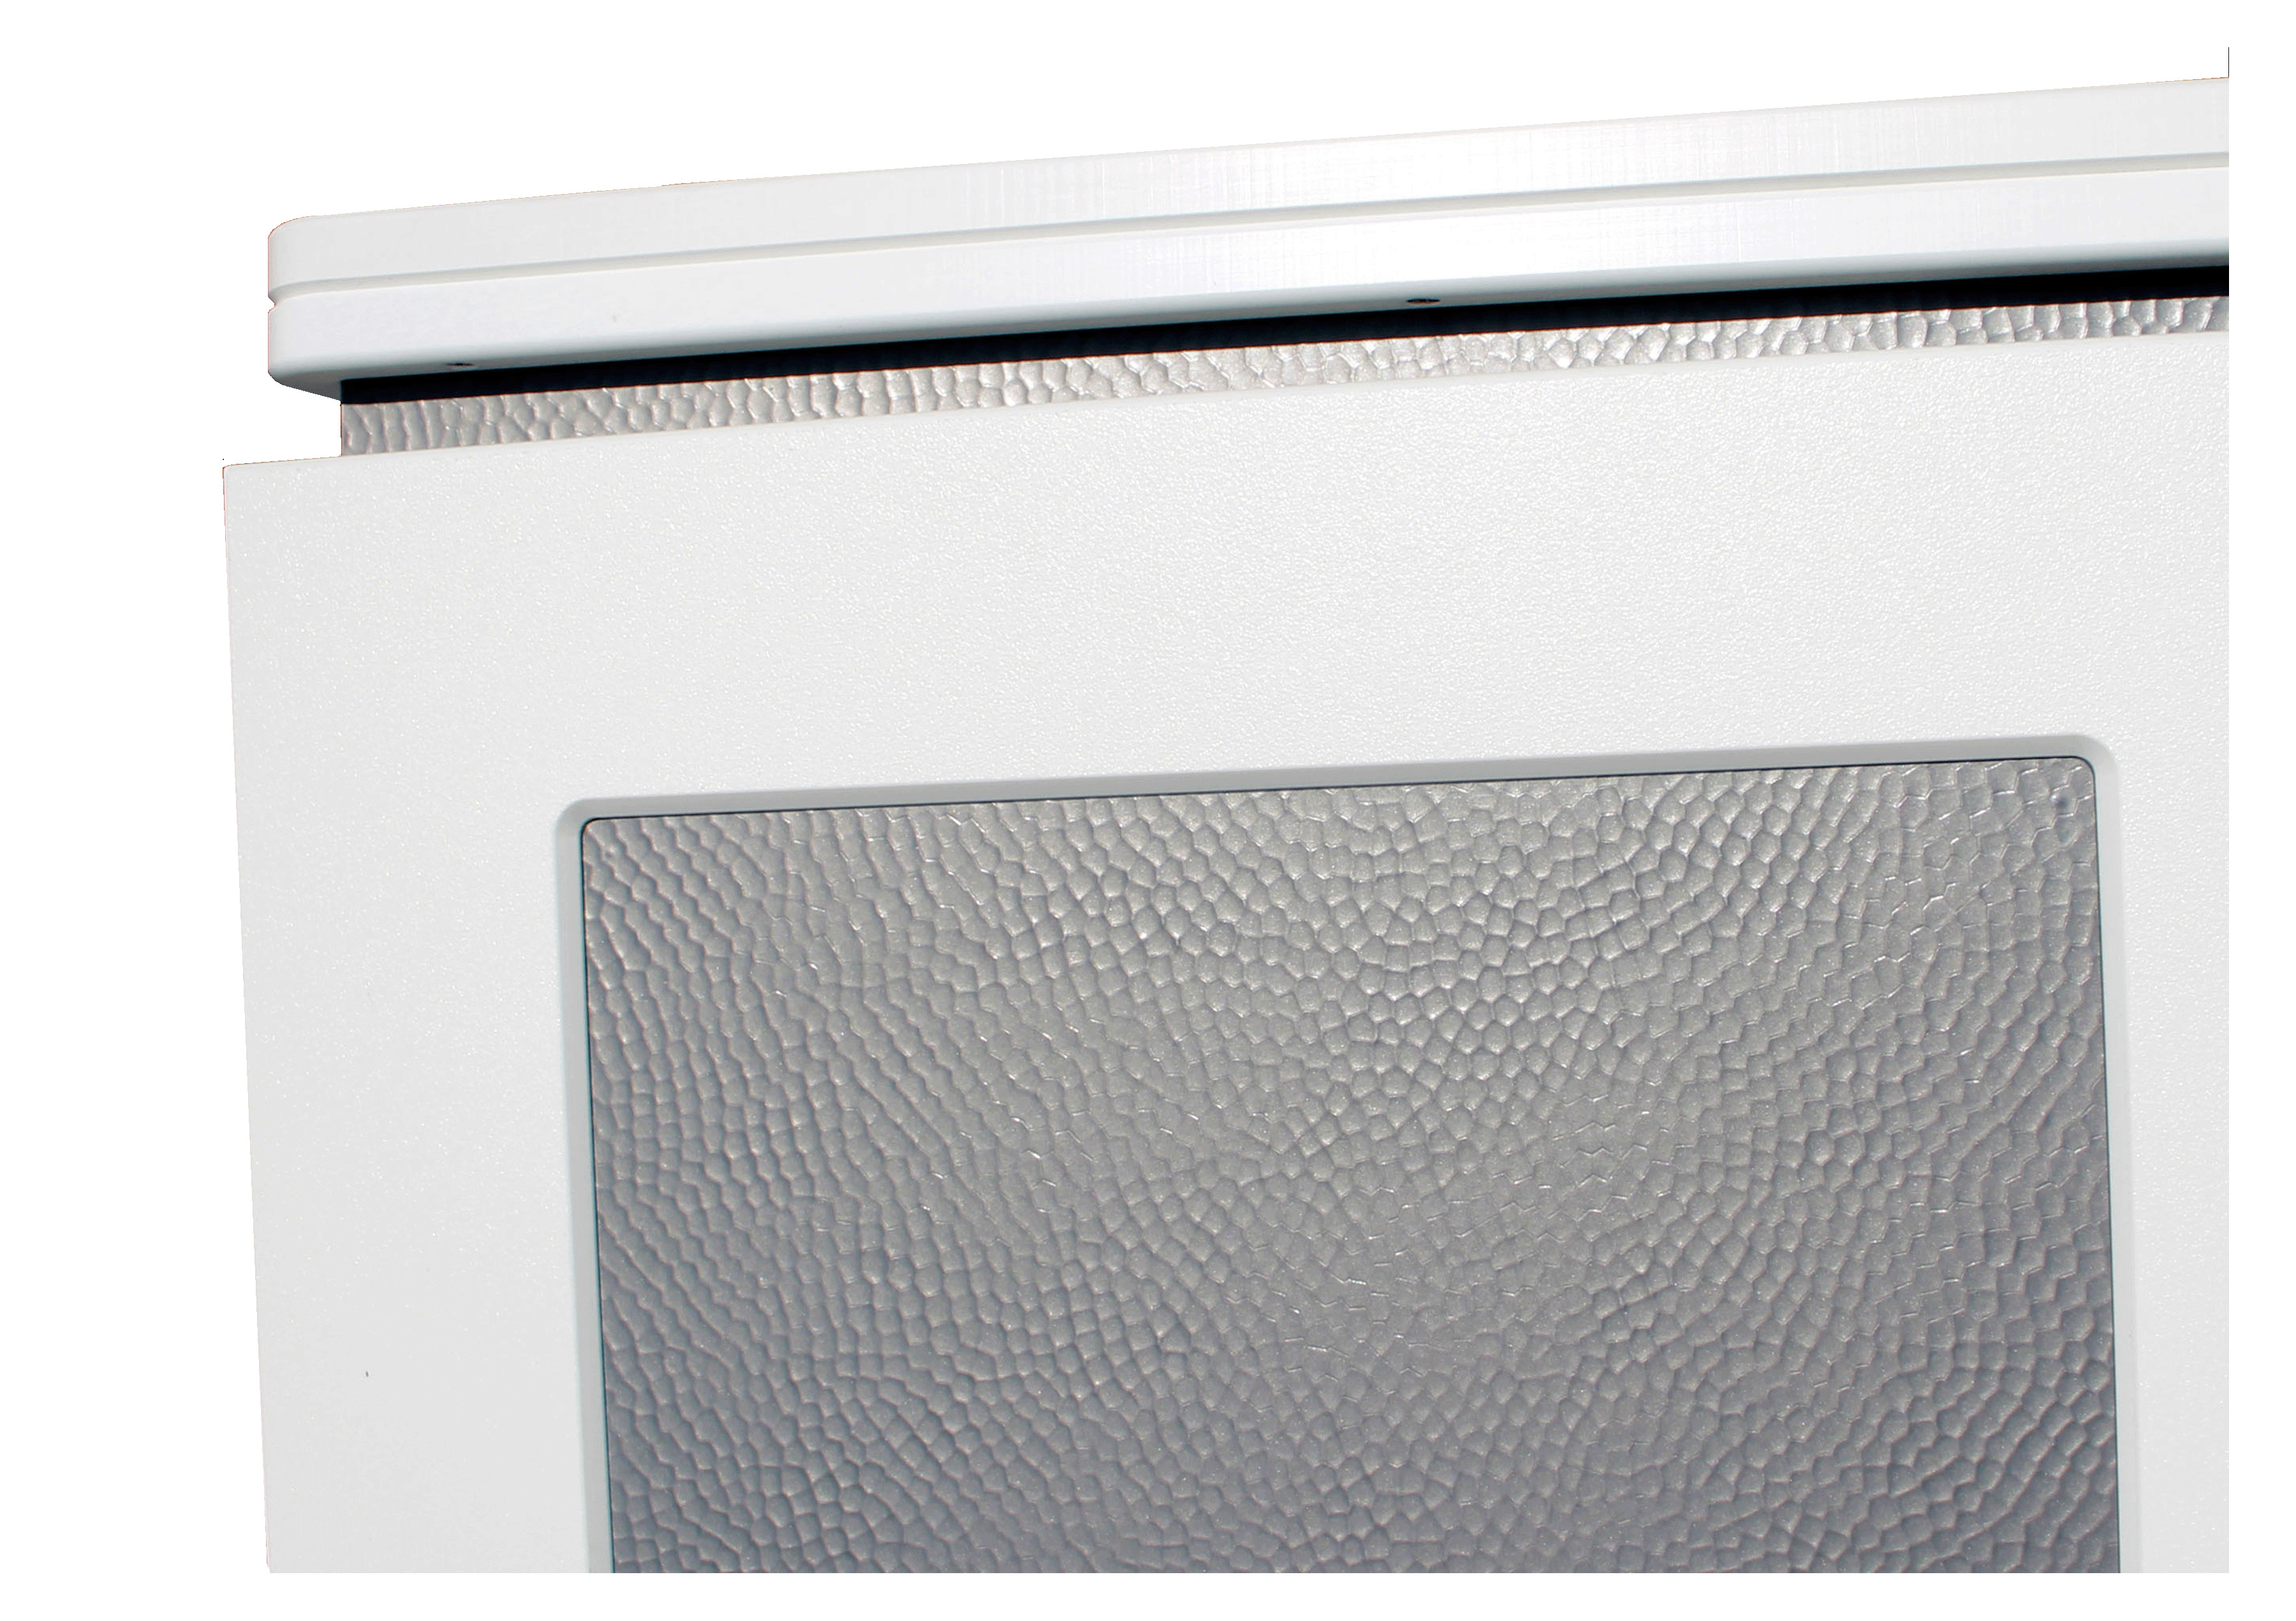 Designboard provides metallic looks made of low-maintenance HDPE.